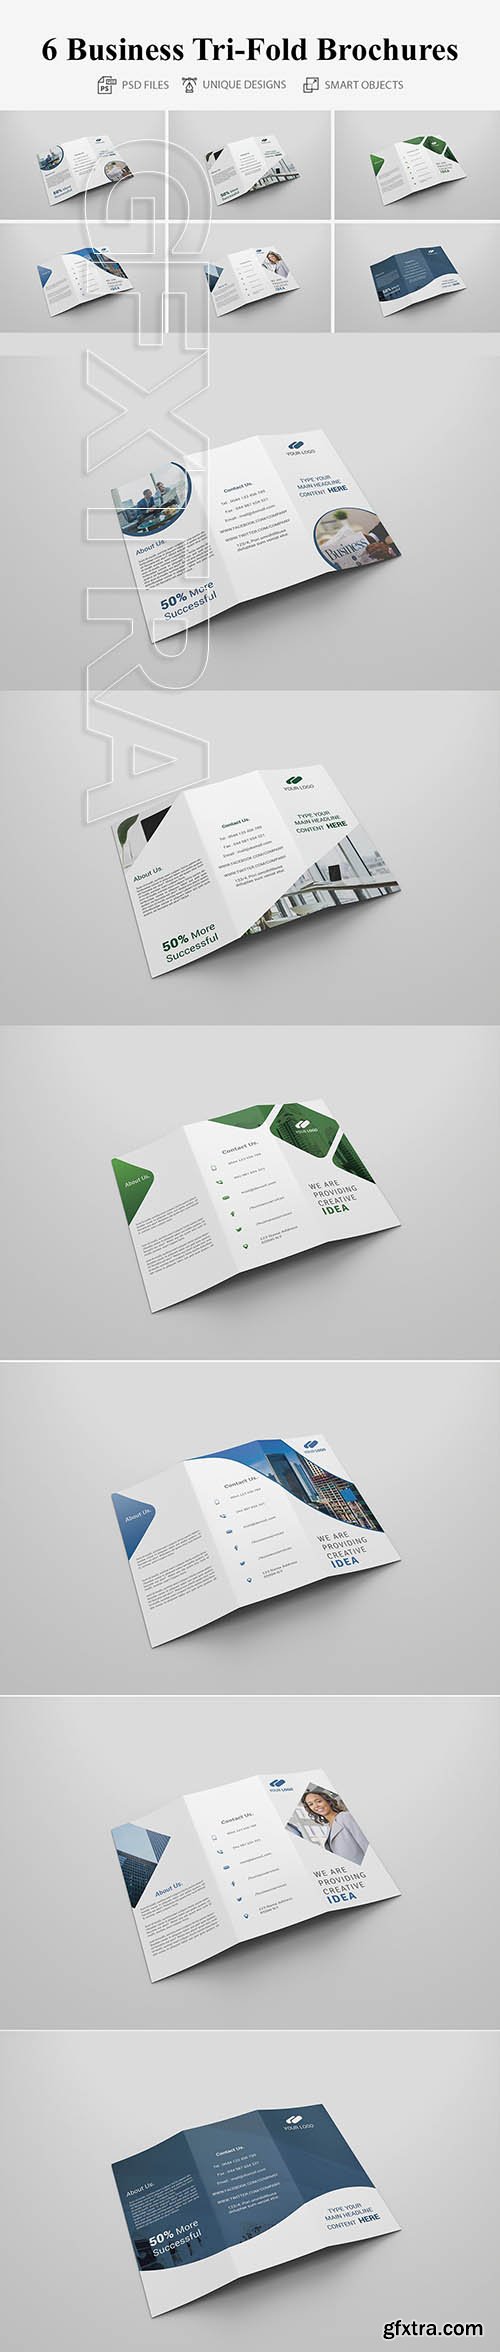 CreativeMarket - 6 Business Tri-fold Brochures 4160617